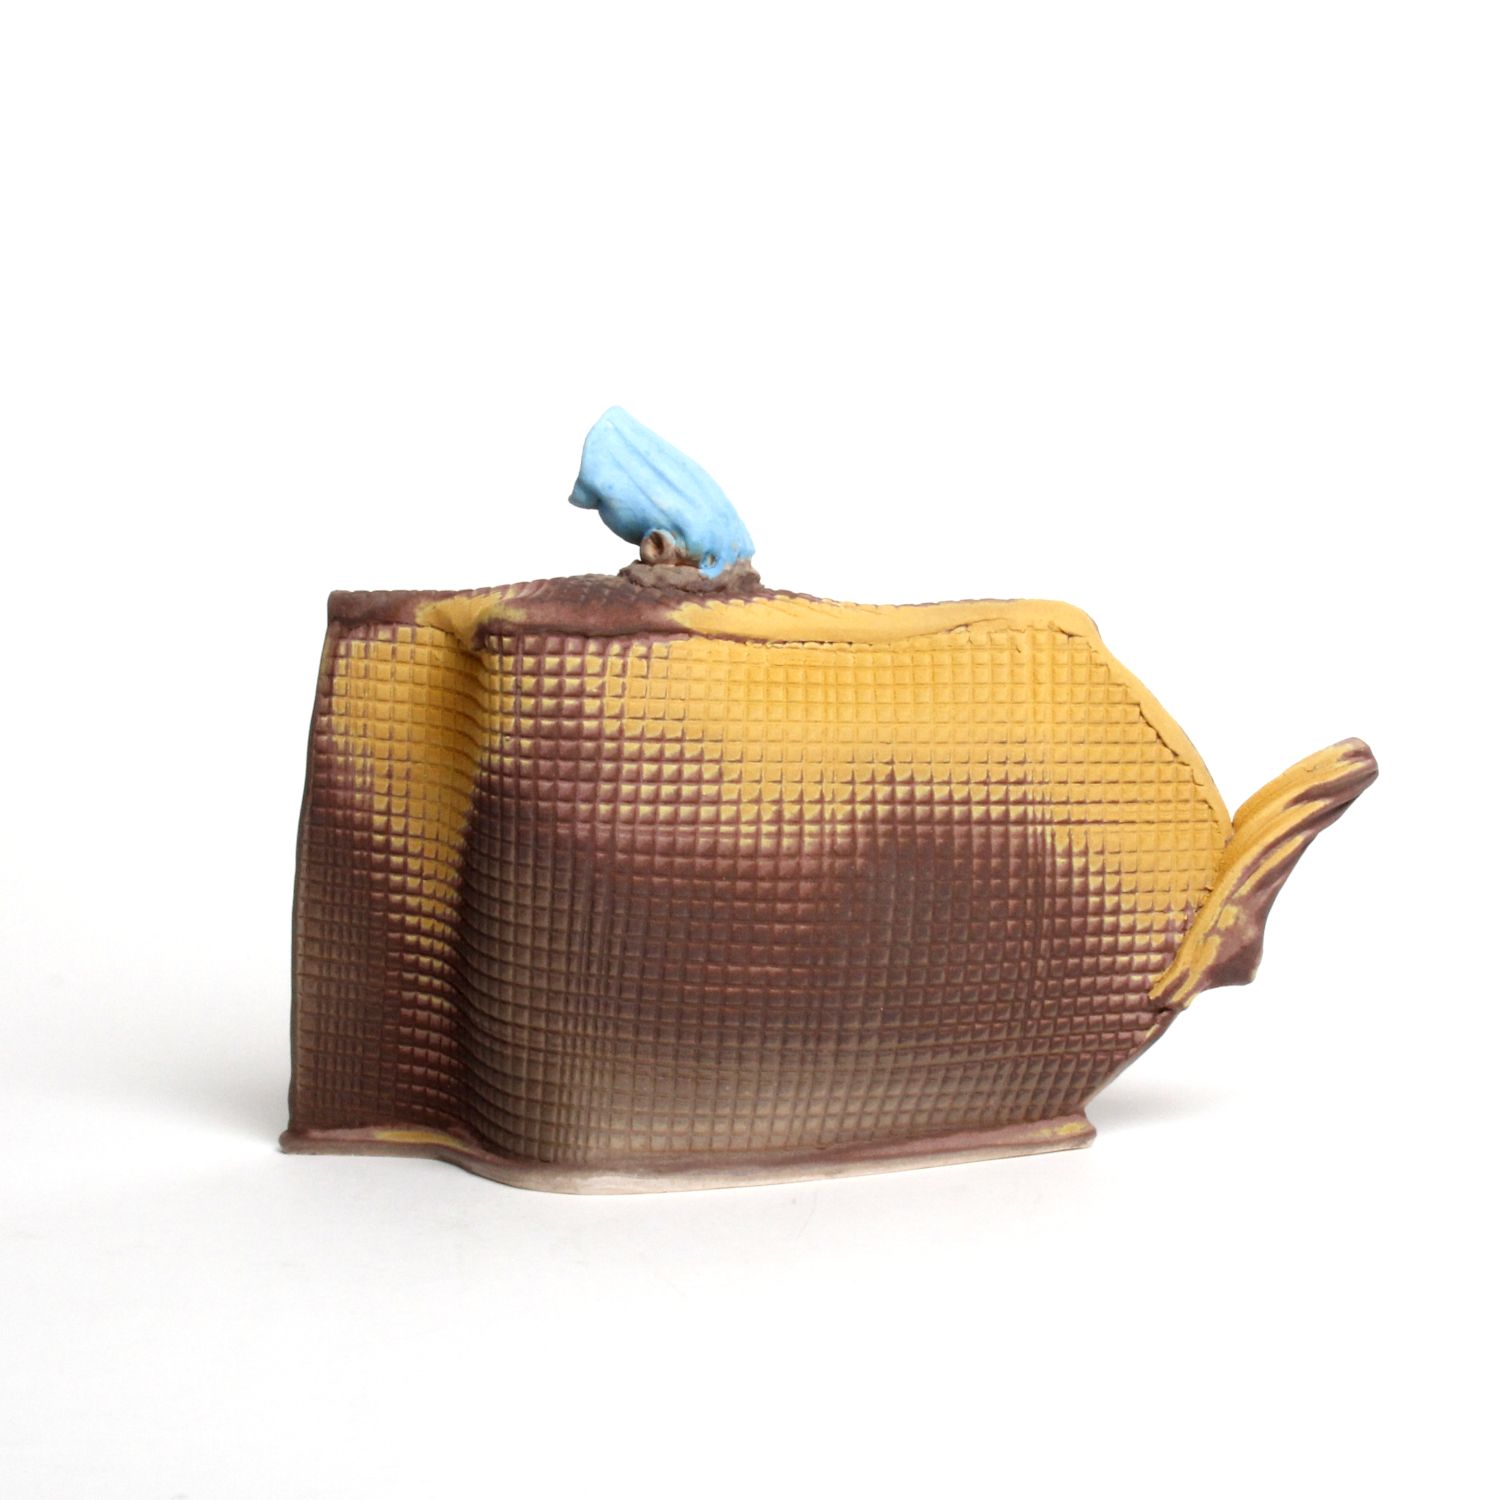 Shu-Chen Cheng: Yellow Flat Teapot Sculpture Product Image 4 of 4